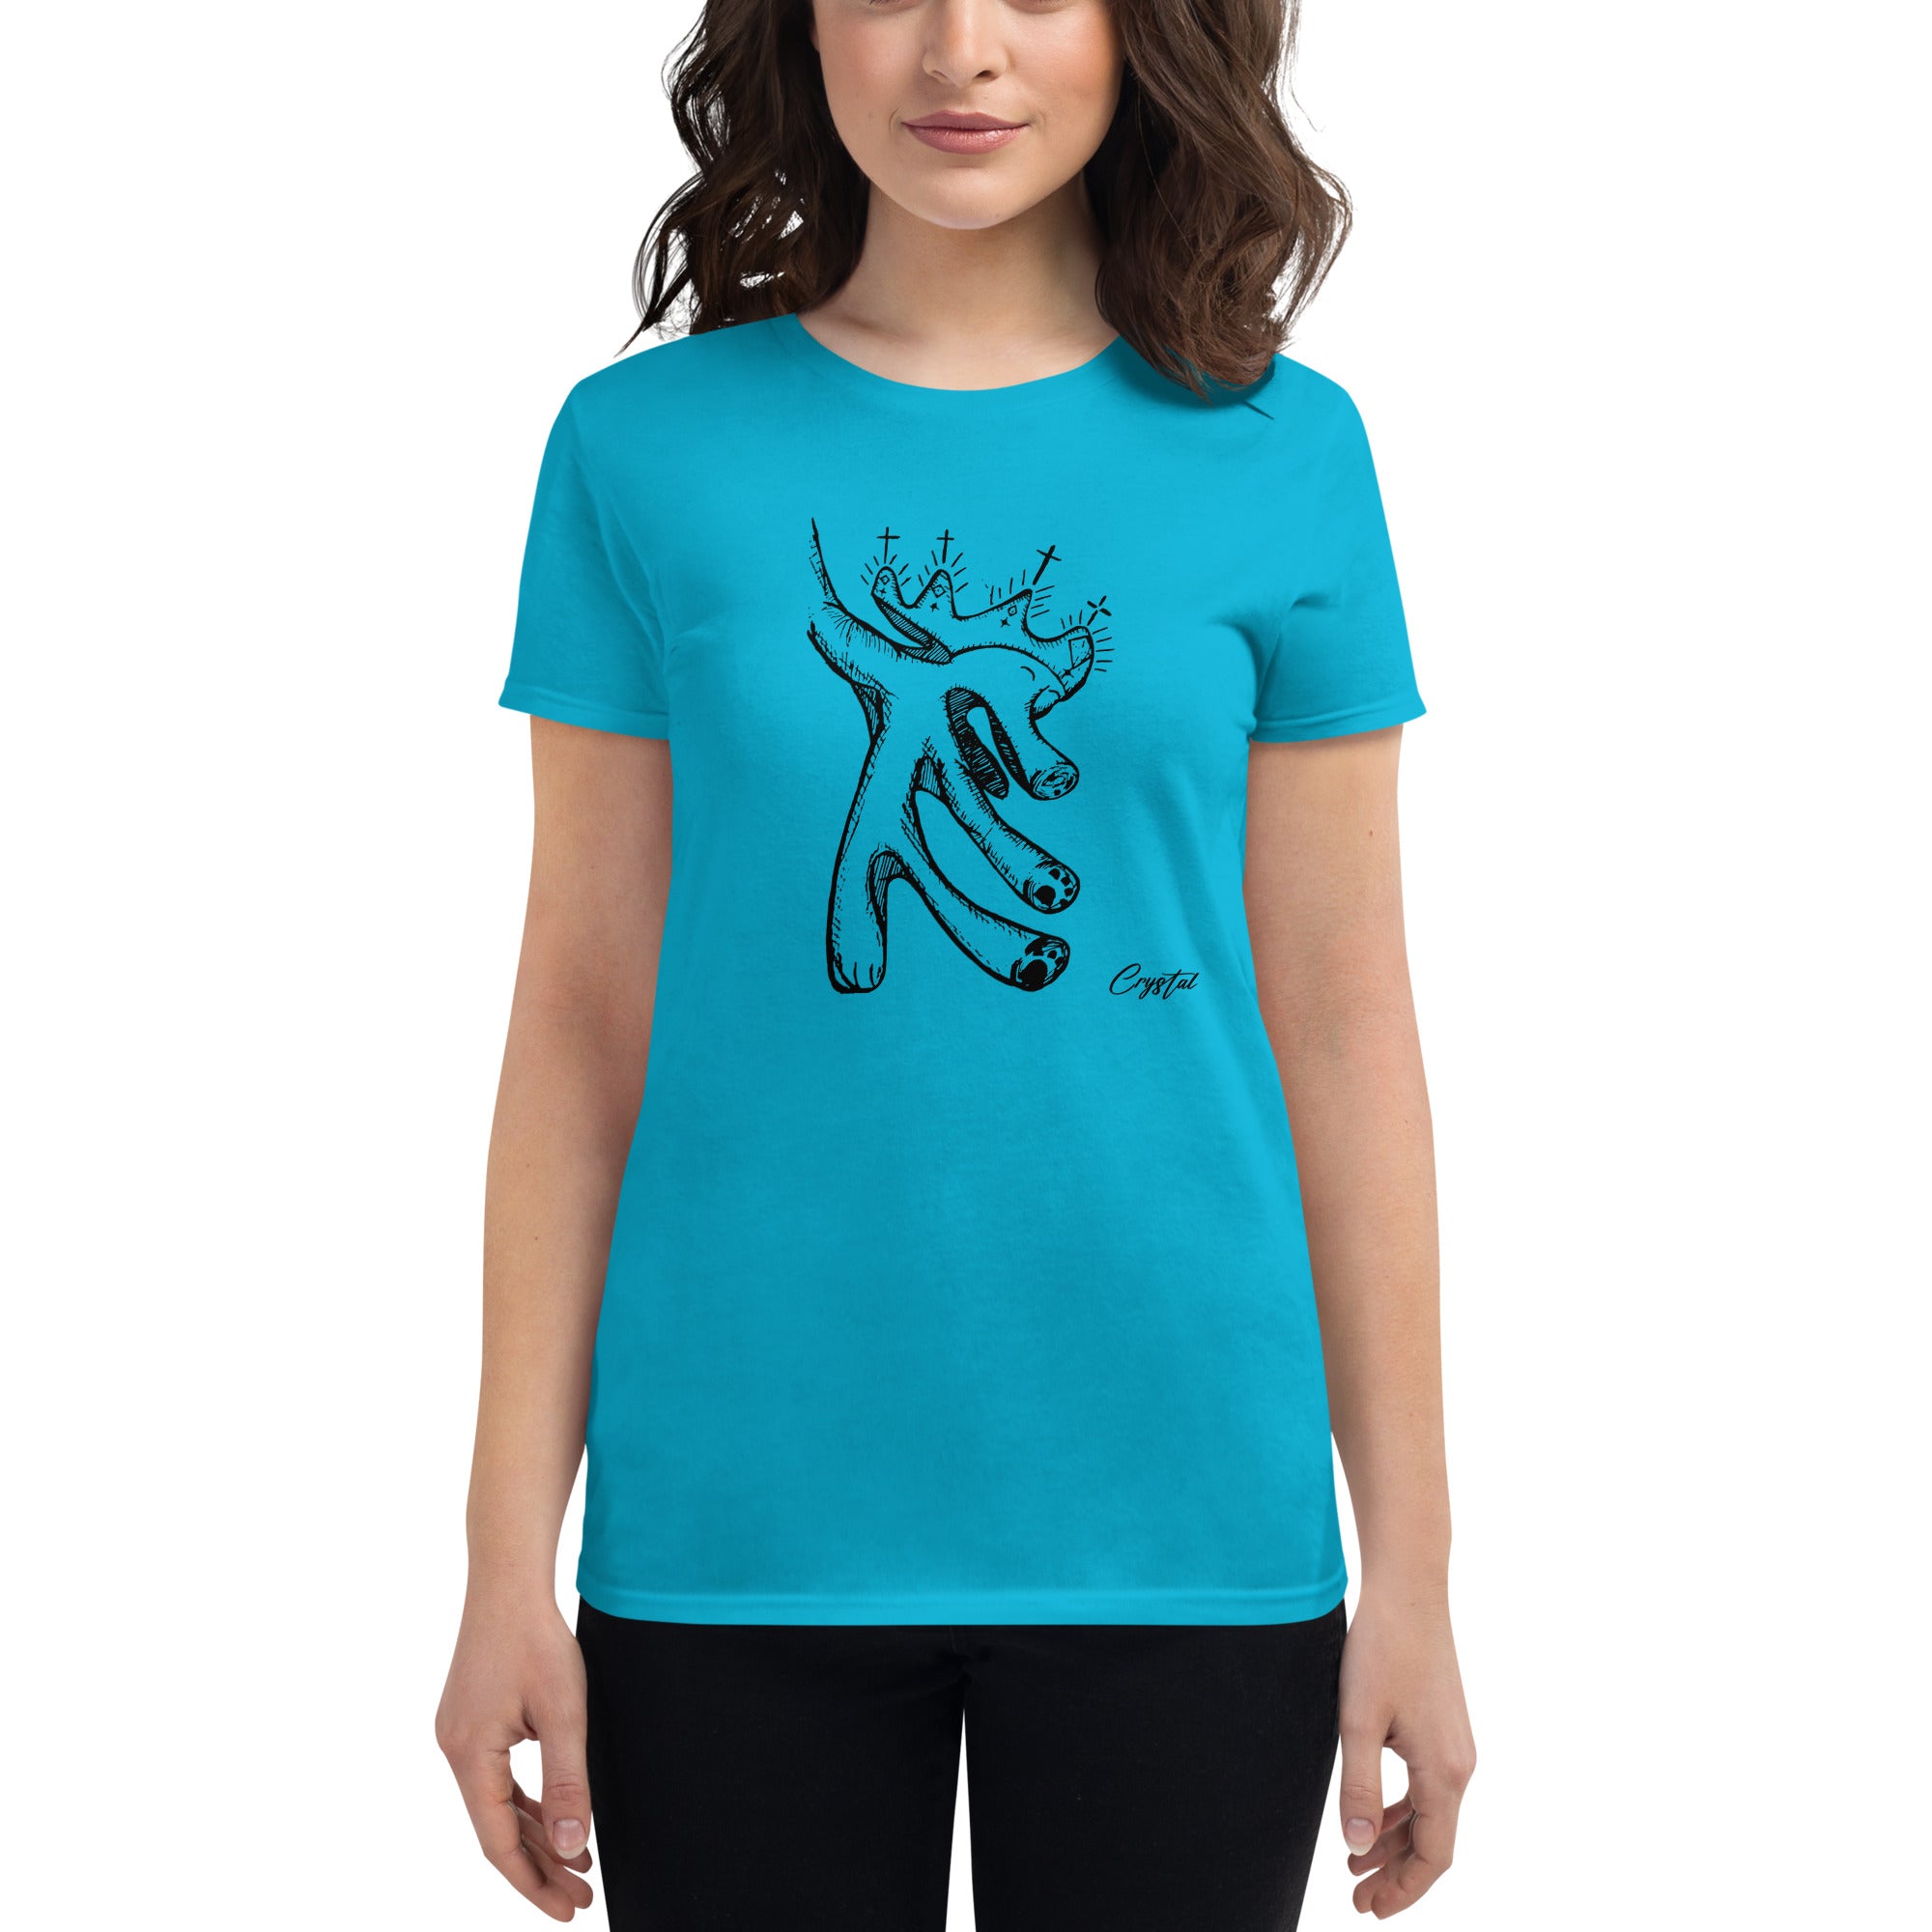 Happy "Pig" Dinosaur Dancing with Crown - Cute & Creepy "Stay Weird" Cartoon Illustration  Women's short sleeve t-shirt